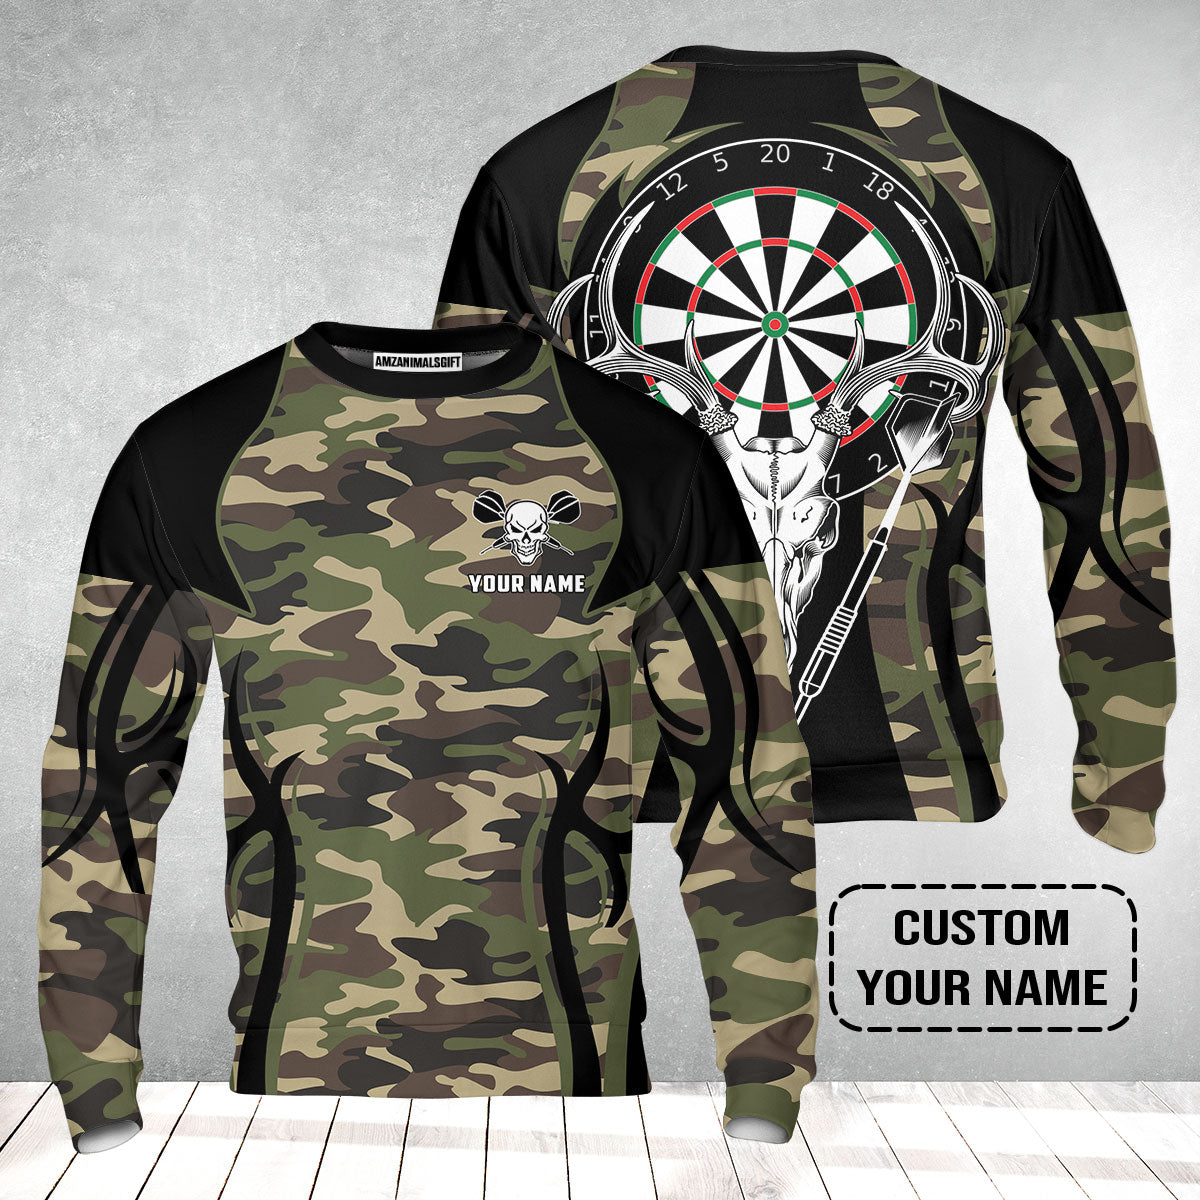 Darts Custom Name Sweatshirt, Camo Skull Deer Dartboard Personalized Sweatshirt - Gift For Darts Lovers, Friend, Darts Team Player